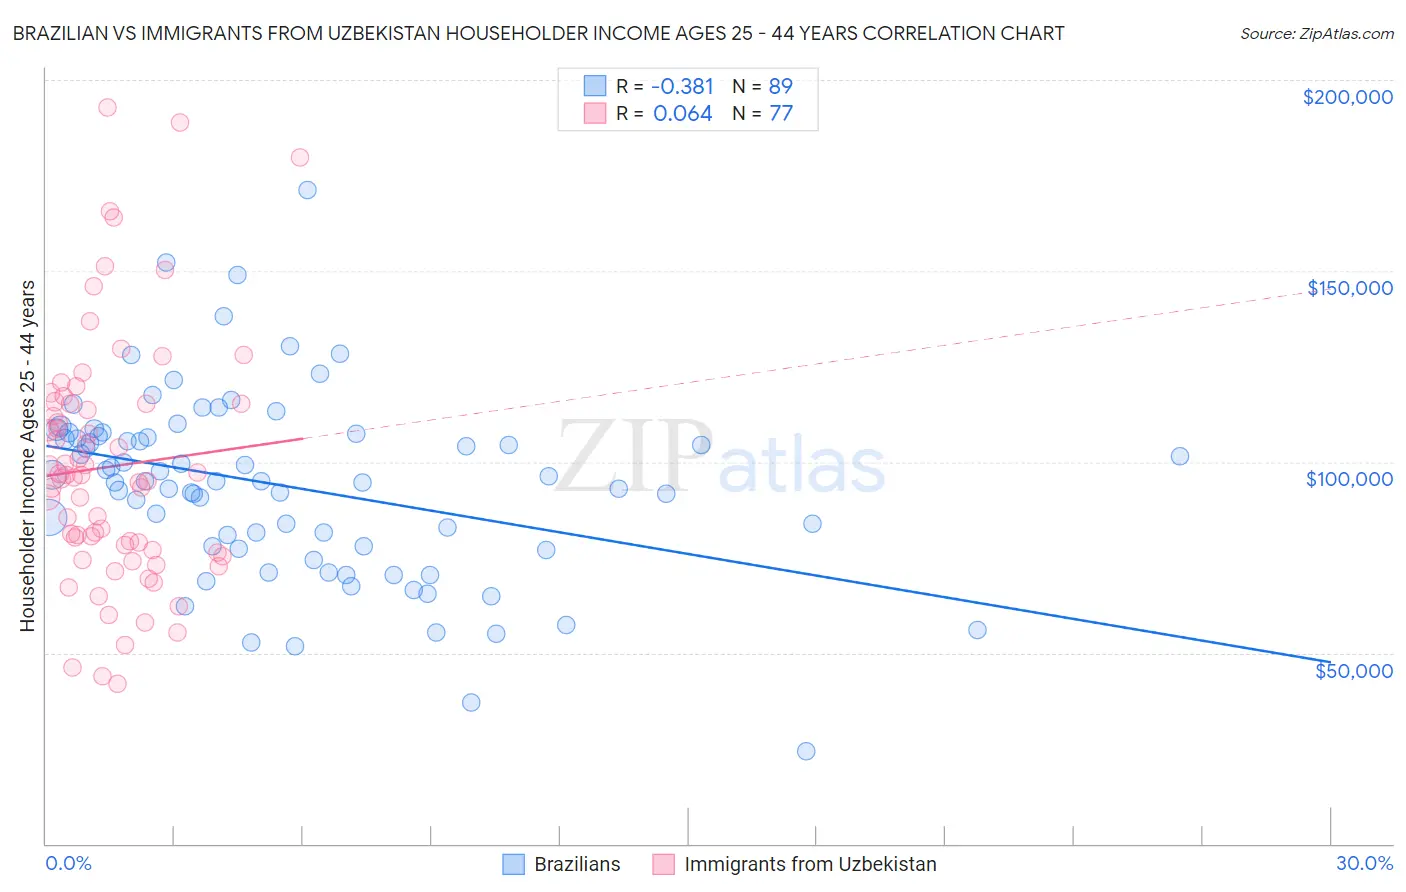 Brazilian vs Immigrants from Uzbekistan Householder Income Ages 25 - 44 years